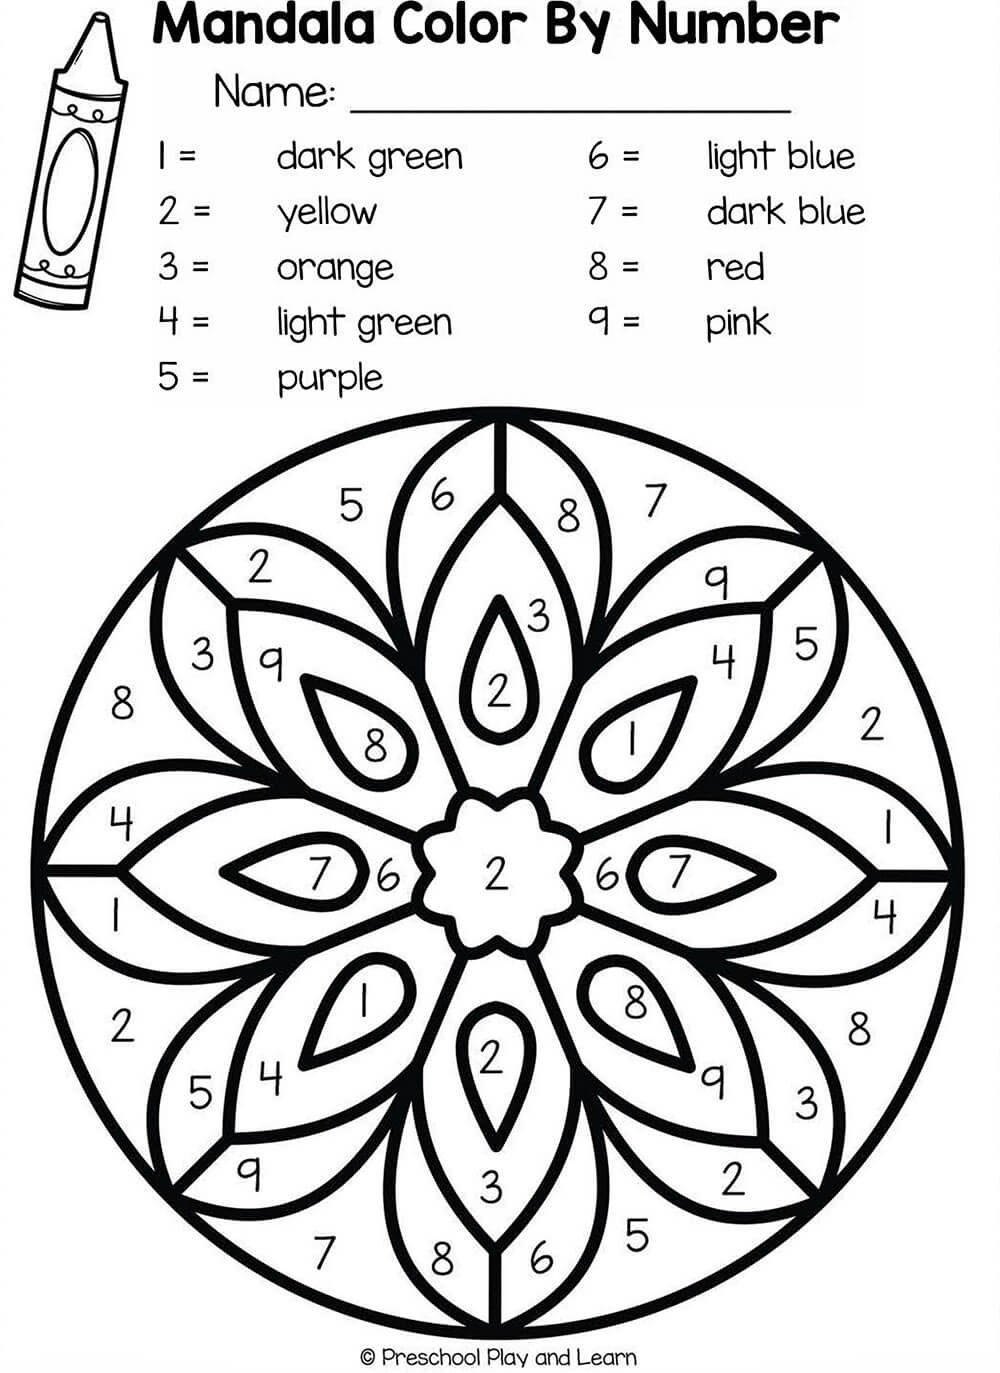 Mandala Color by Number - sheet 11